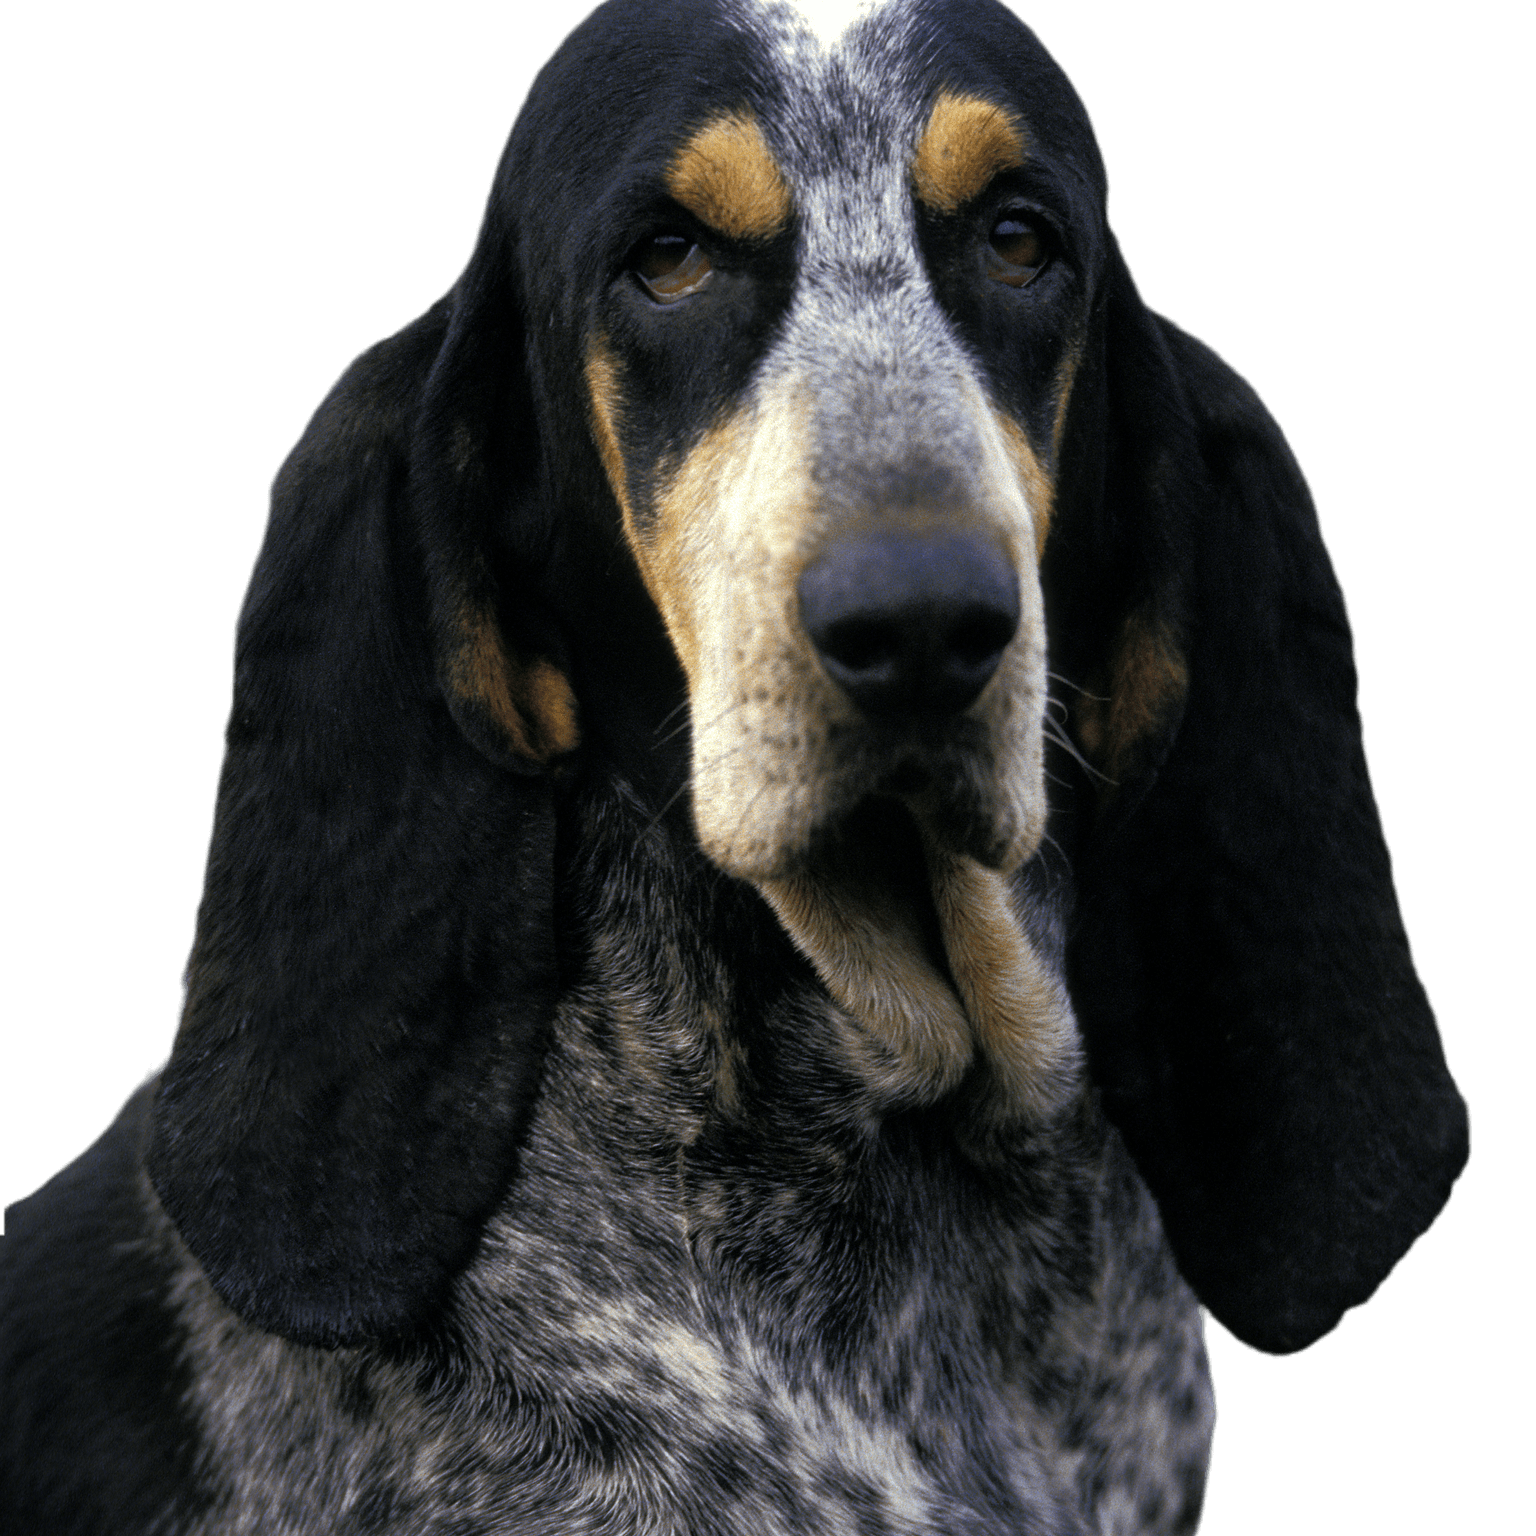 Pequeño perro azul gascón, retrato de un perro